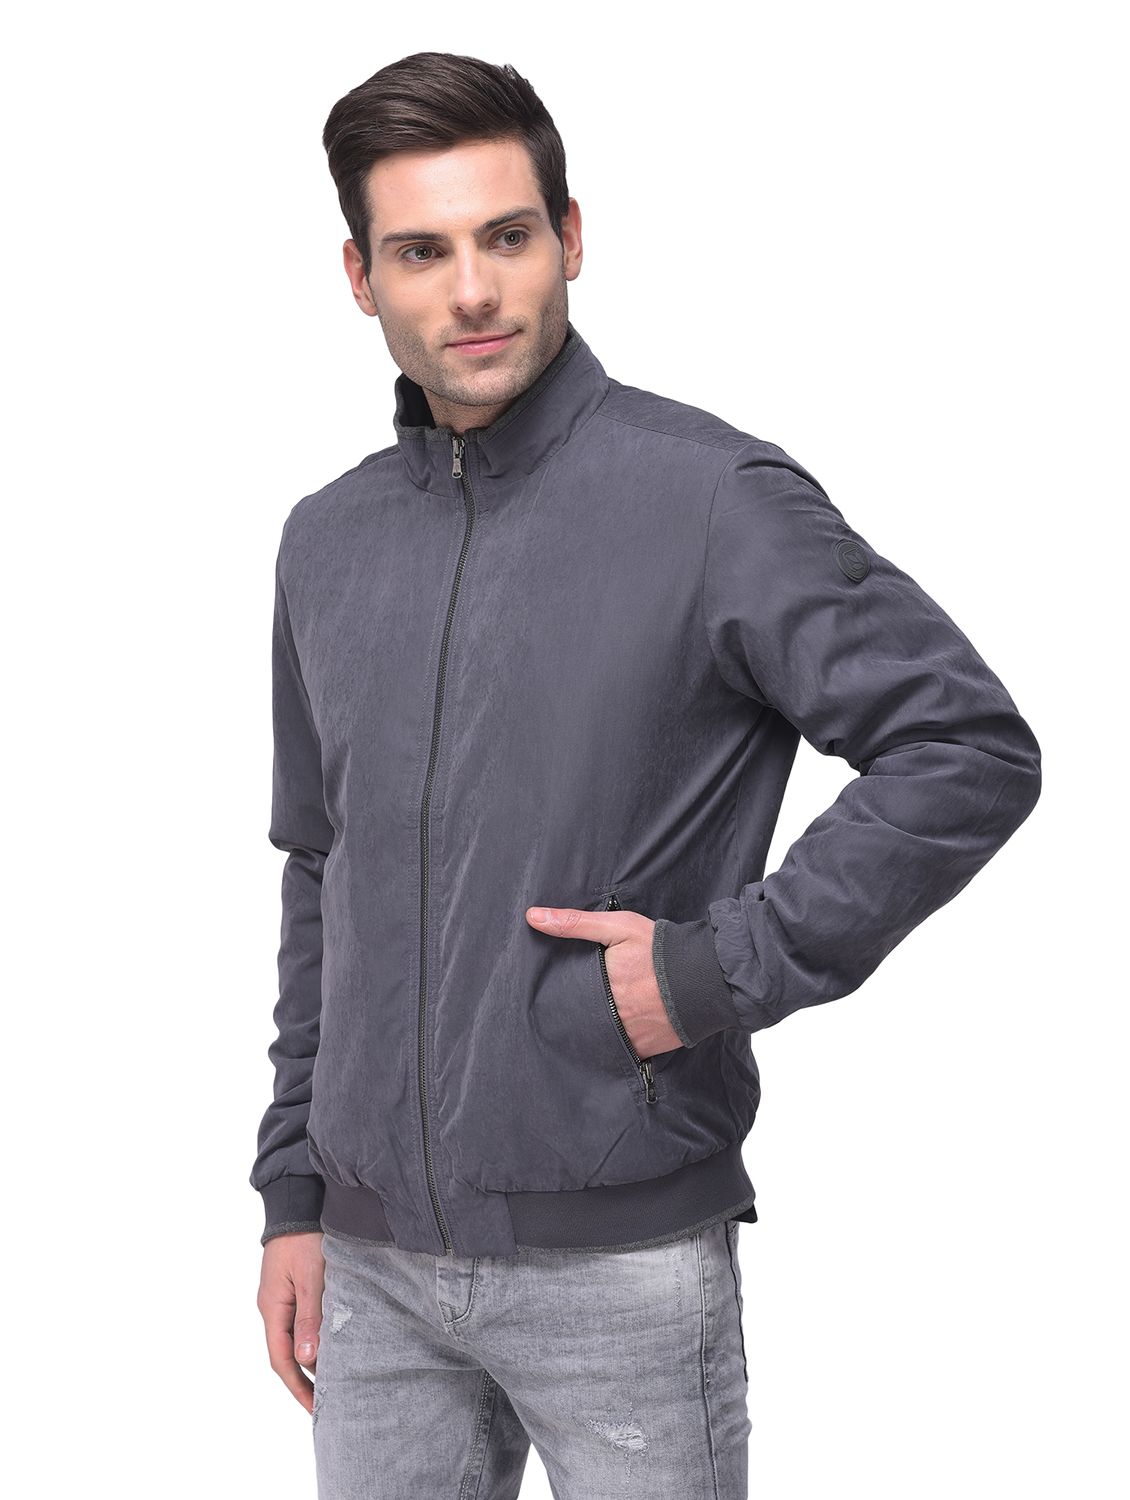 Grey long sleeve jacket